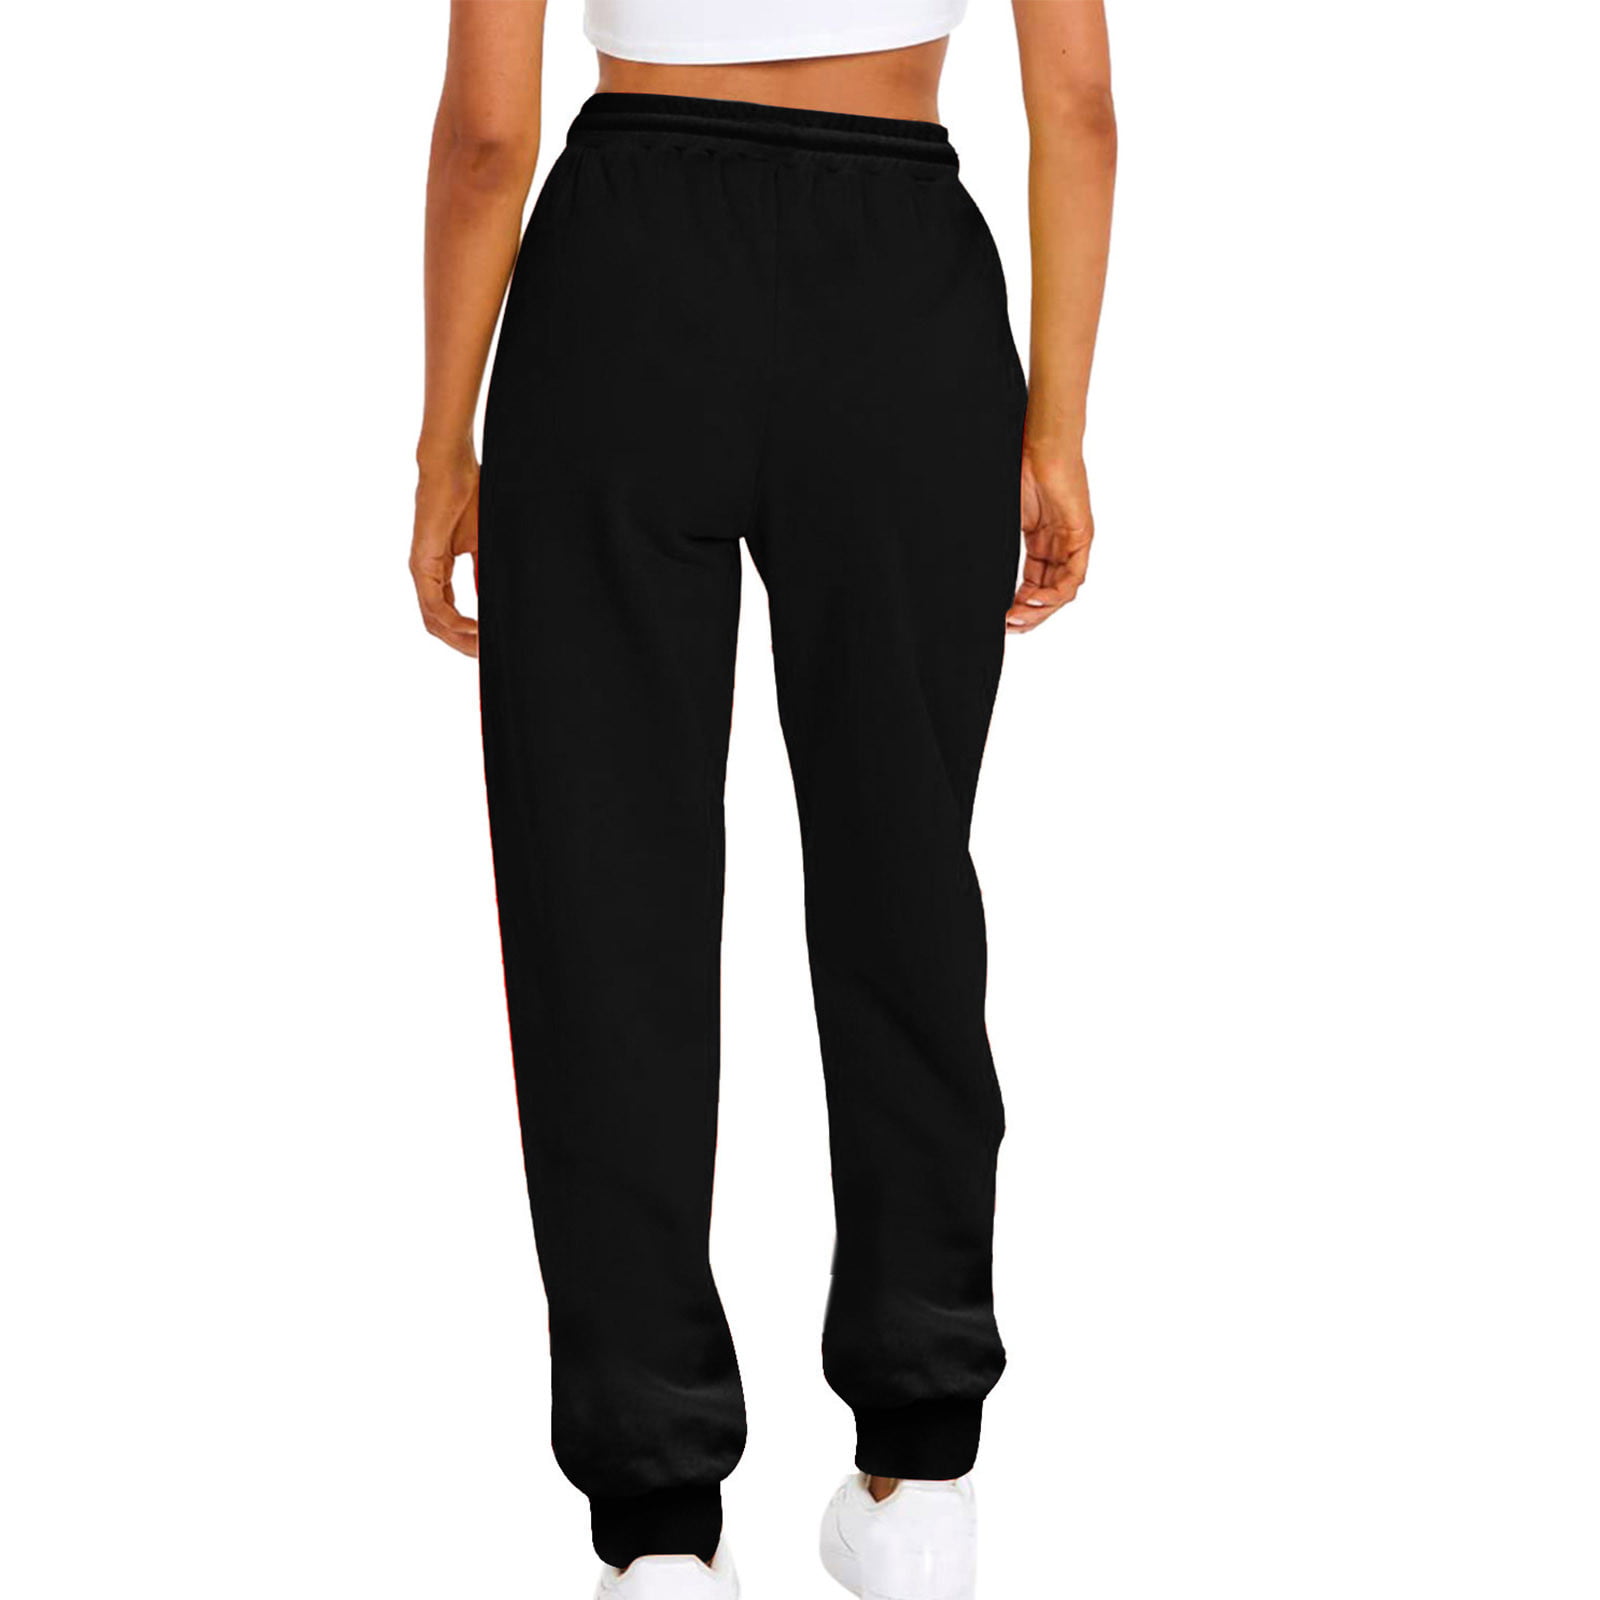 JWZUY Womens Plain Pants Casual Jogger Sweatpants Ankle Length Drawstrijg  Elastic Waist Pant Workout Fitness Pants Black XL